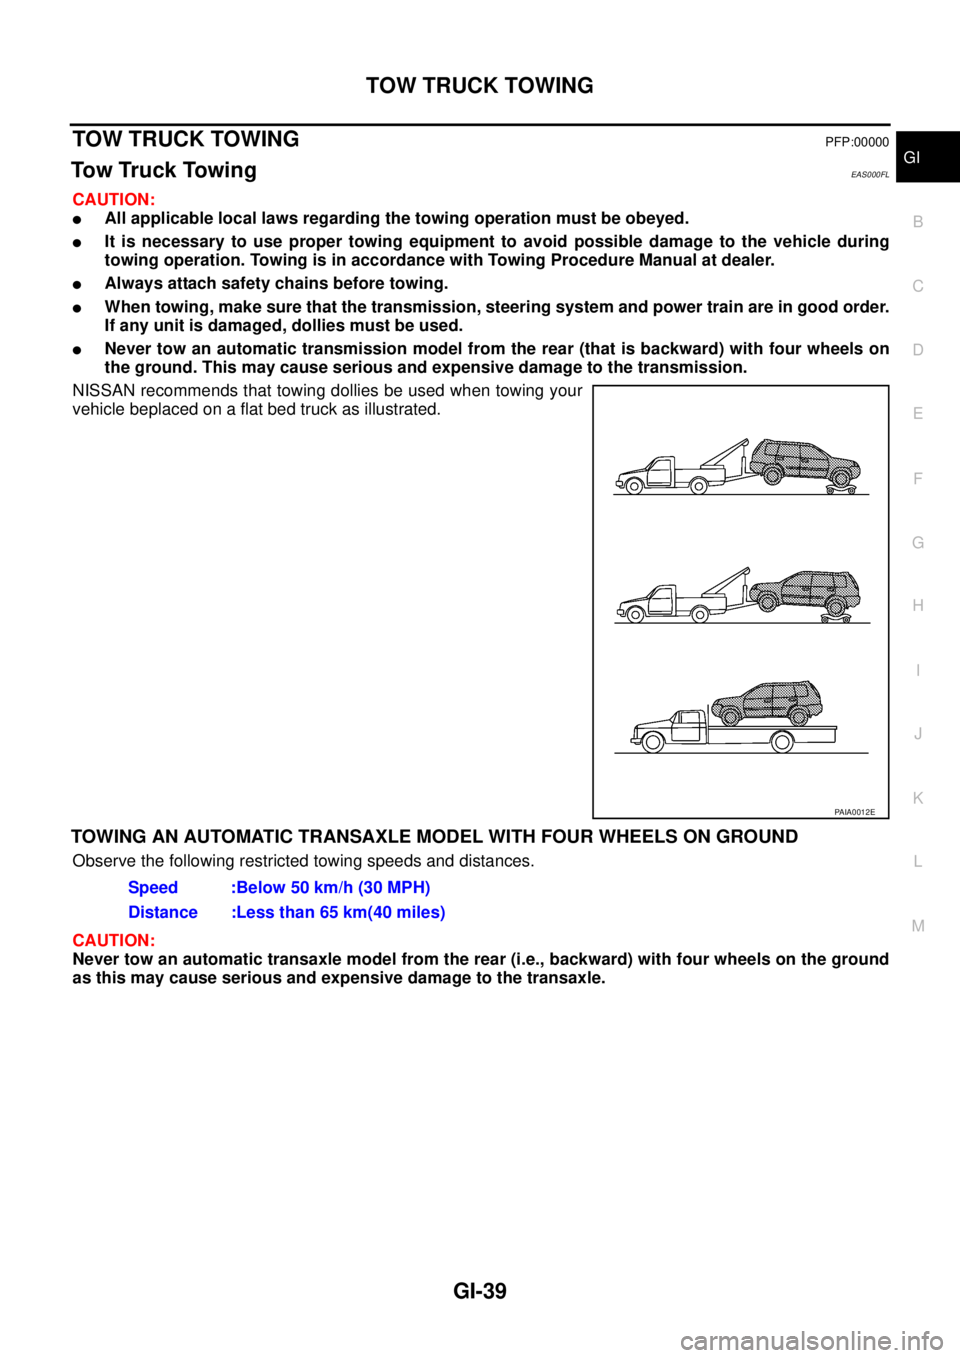 NISSAN X-TRAIL 2003  Service Repair Manual TOW TRUCK TOWING
GI-39
C
D
E
F
G
H
I
J
K
L
MB
GI
 
TOW TRUCK TOWINGPFP:00000
Tow Truck TowingEAS000FL
CAUTION:
All applicable local laws regarding the towing operation must be obeyed.
It is necessar